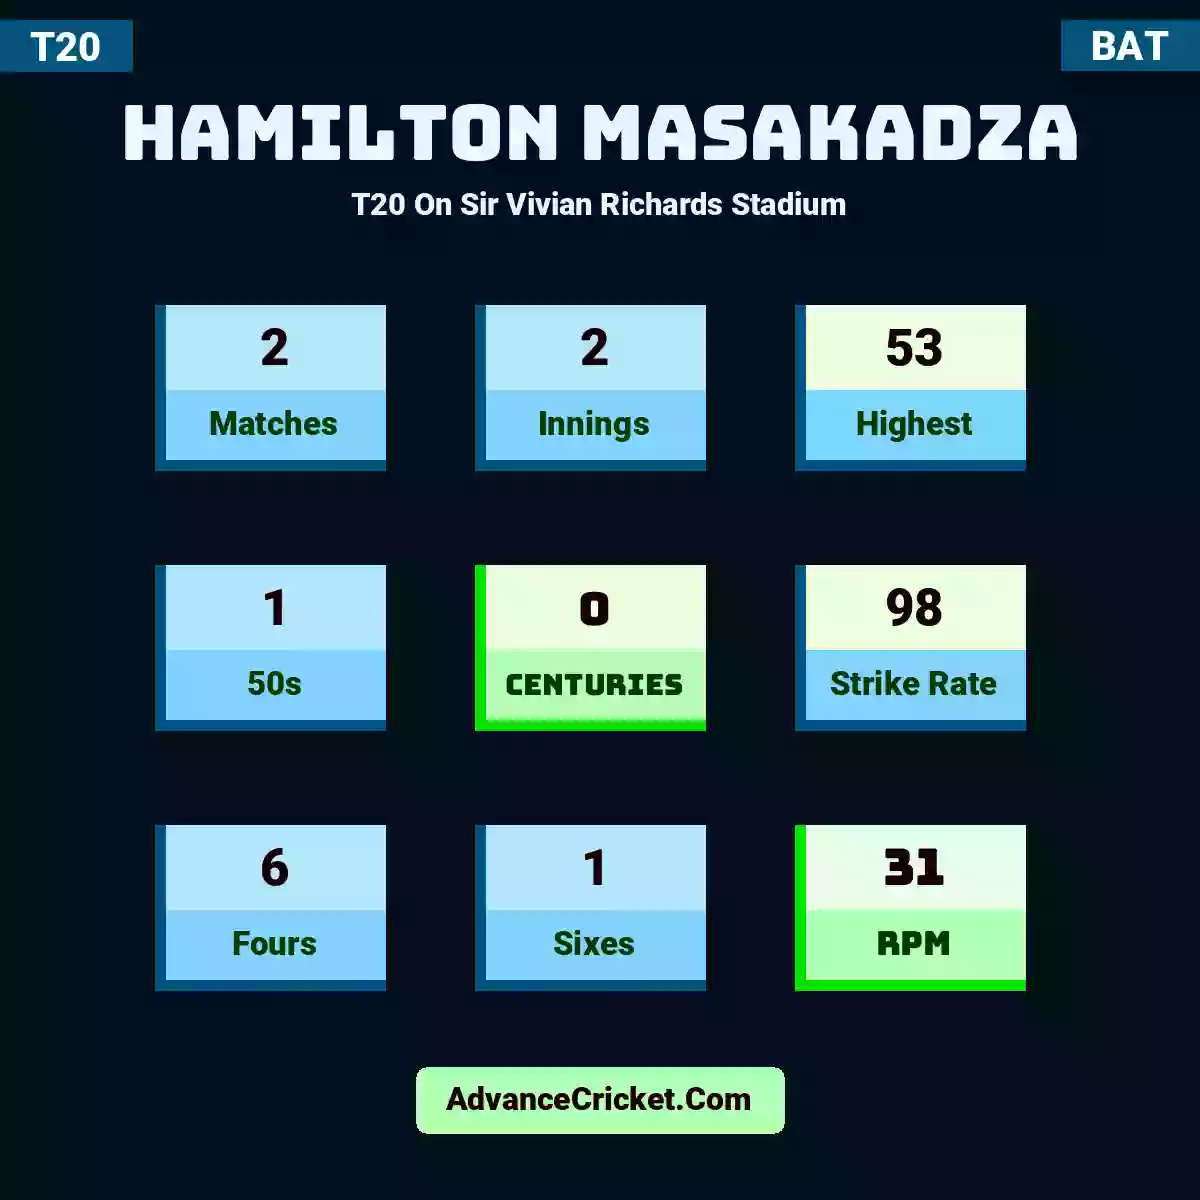 Hamilton Masakadza T20  On Sir Vivian Richards Stadium, Hamilton Masakadza played 2 matches, scored 53 runs as highest, 1 half-centuries, and 0 centuries, with a strike rate of 98. H.Masakadza hit 6 fours and 1 sixes, with an RPM of 31.